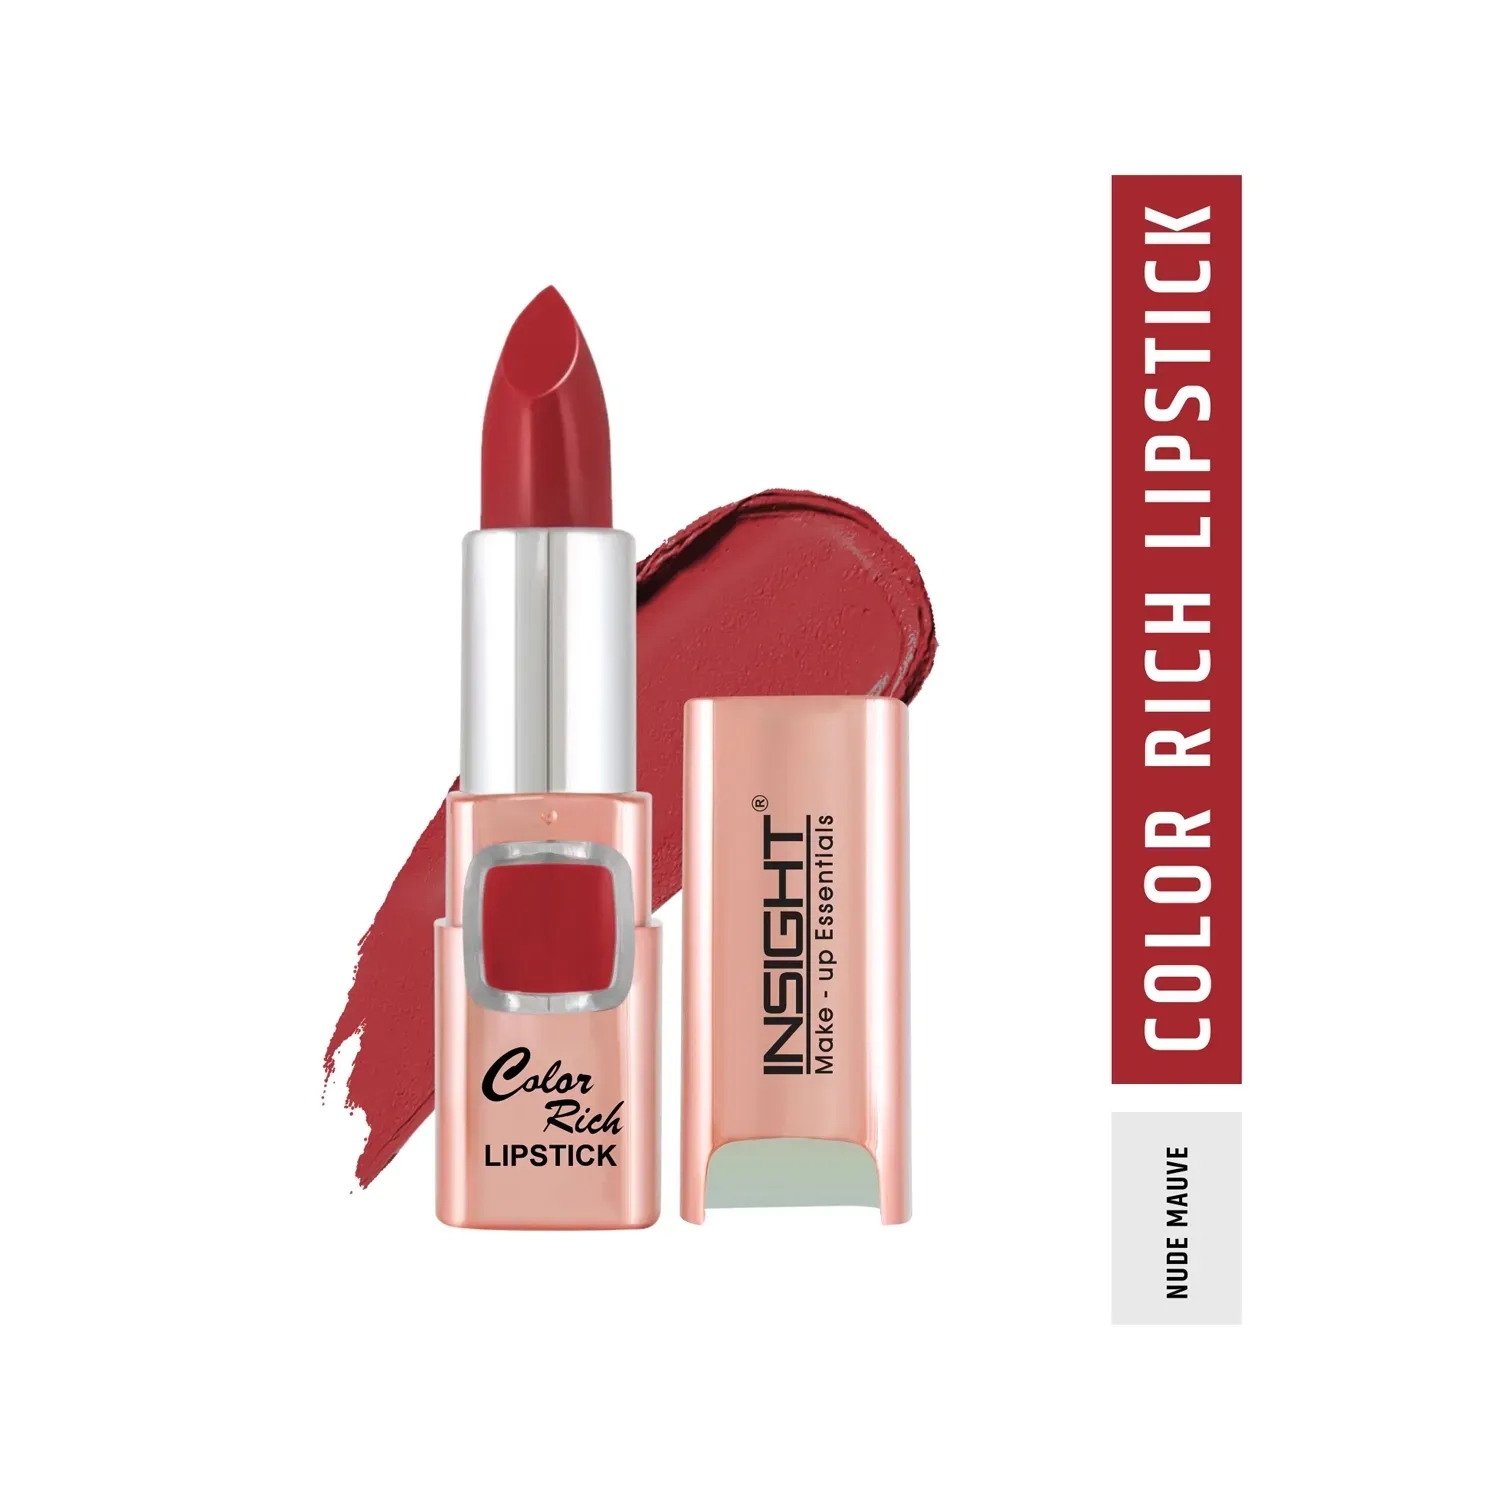 Insight Cosmetics | Insight Cosmetics Color Rich Lipstick - Nude Mauve (4.2g)